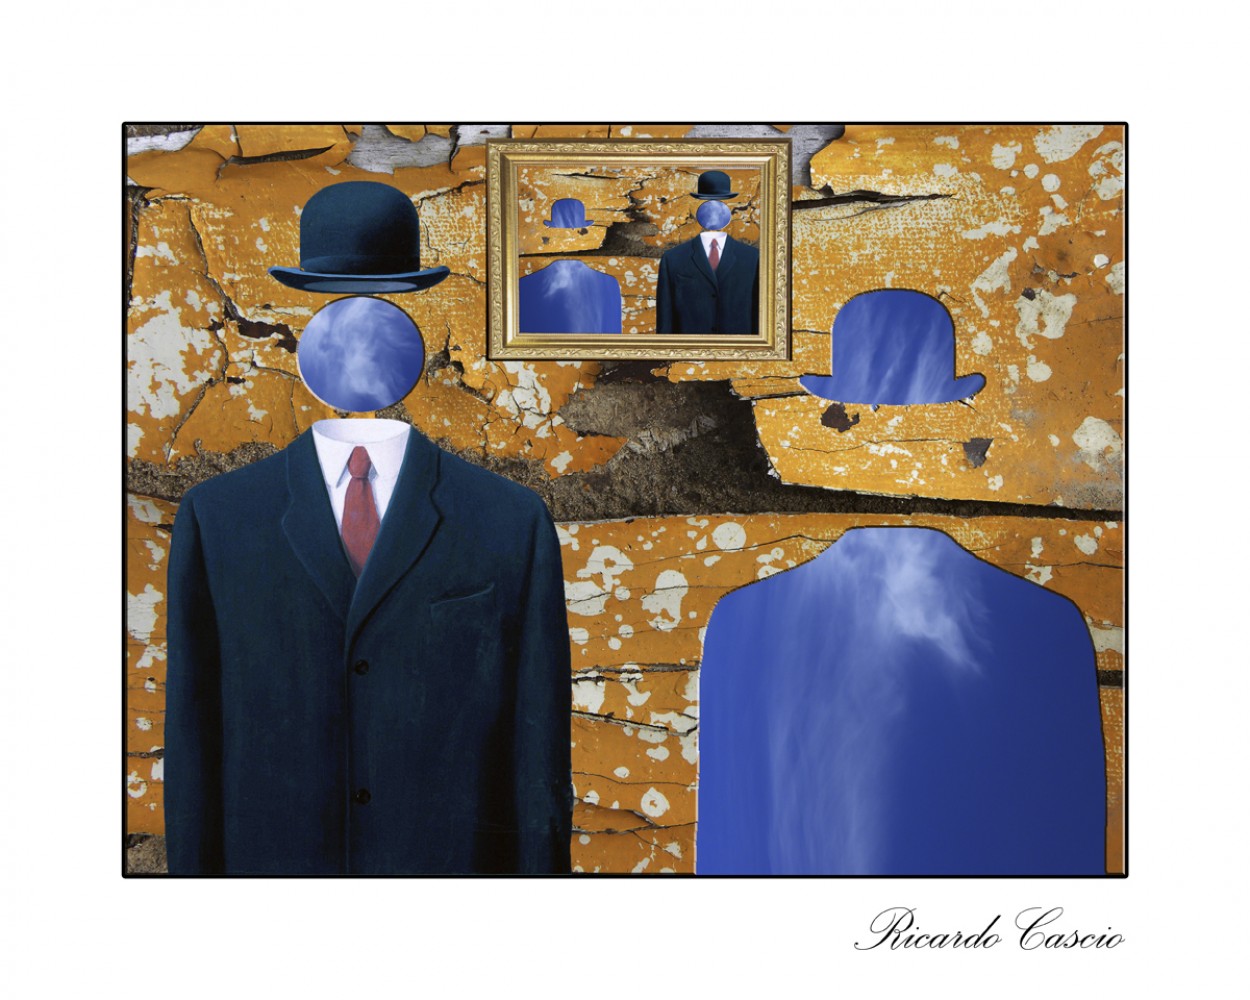 "A la manera de Magritte" de Ricardo Cascio